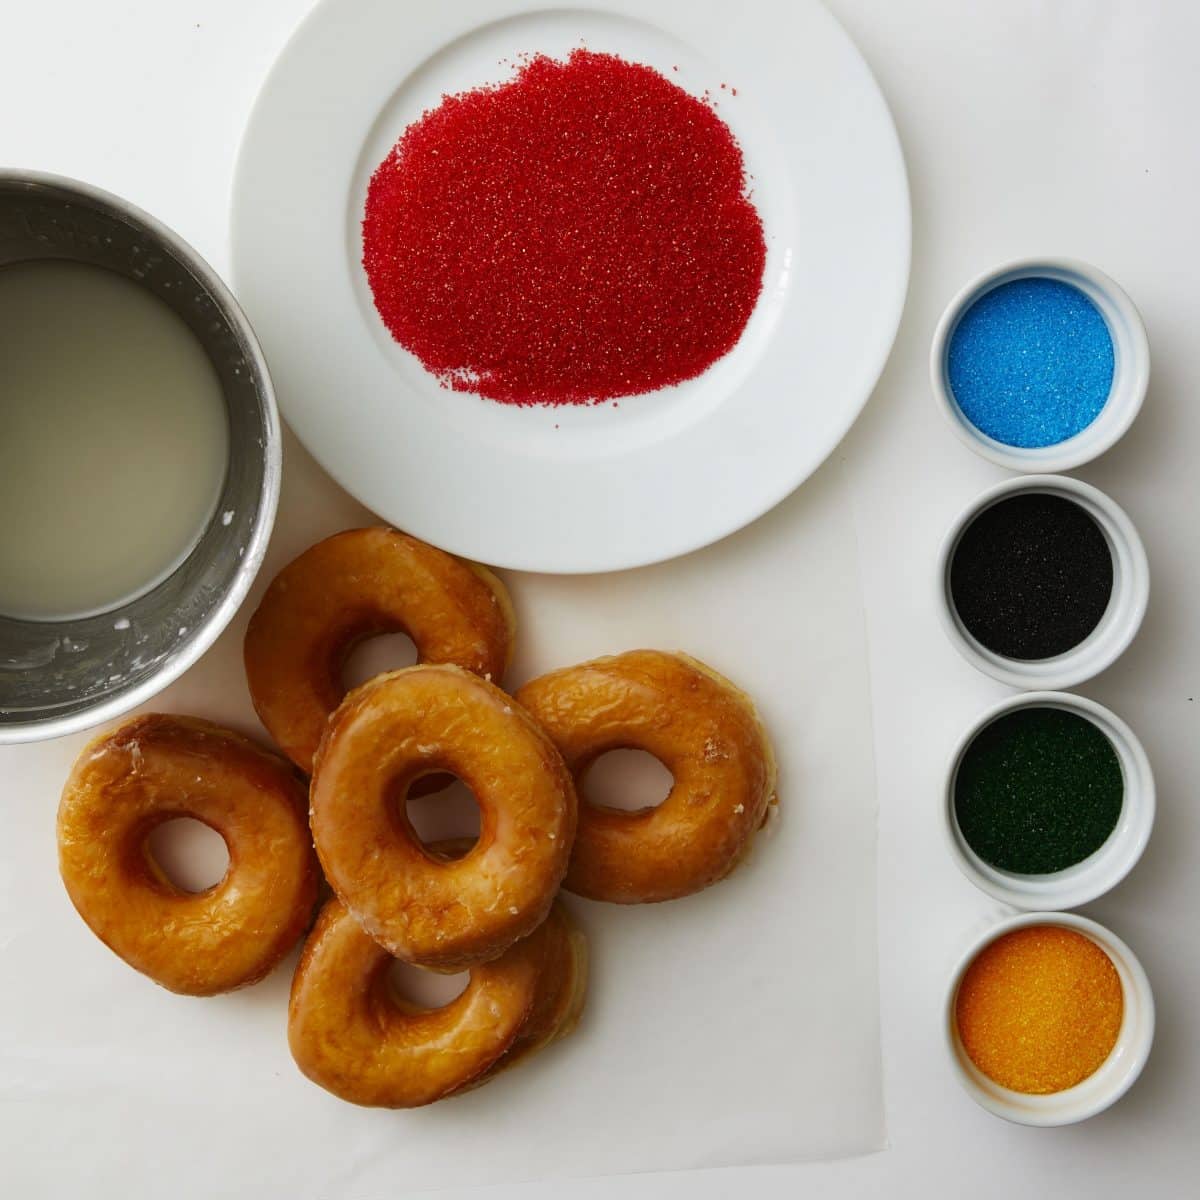 Darcy Miller Designs, Doughnut rings, Olympics, Olympics 2018, PyeongChang, doughnuts, sprinkles, sugar, Olympic rings, snack, breakfast, party, edible craft, Darcy Miller, DIY